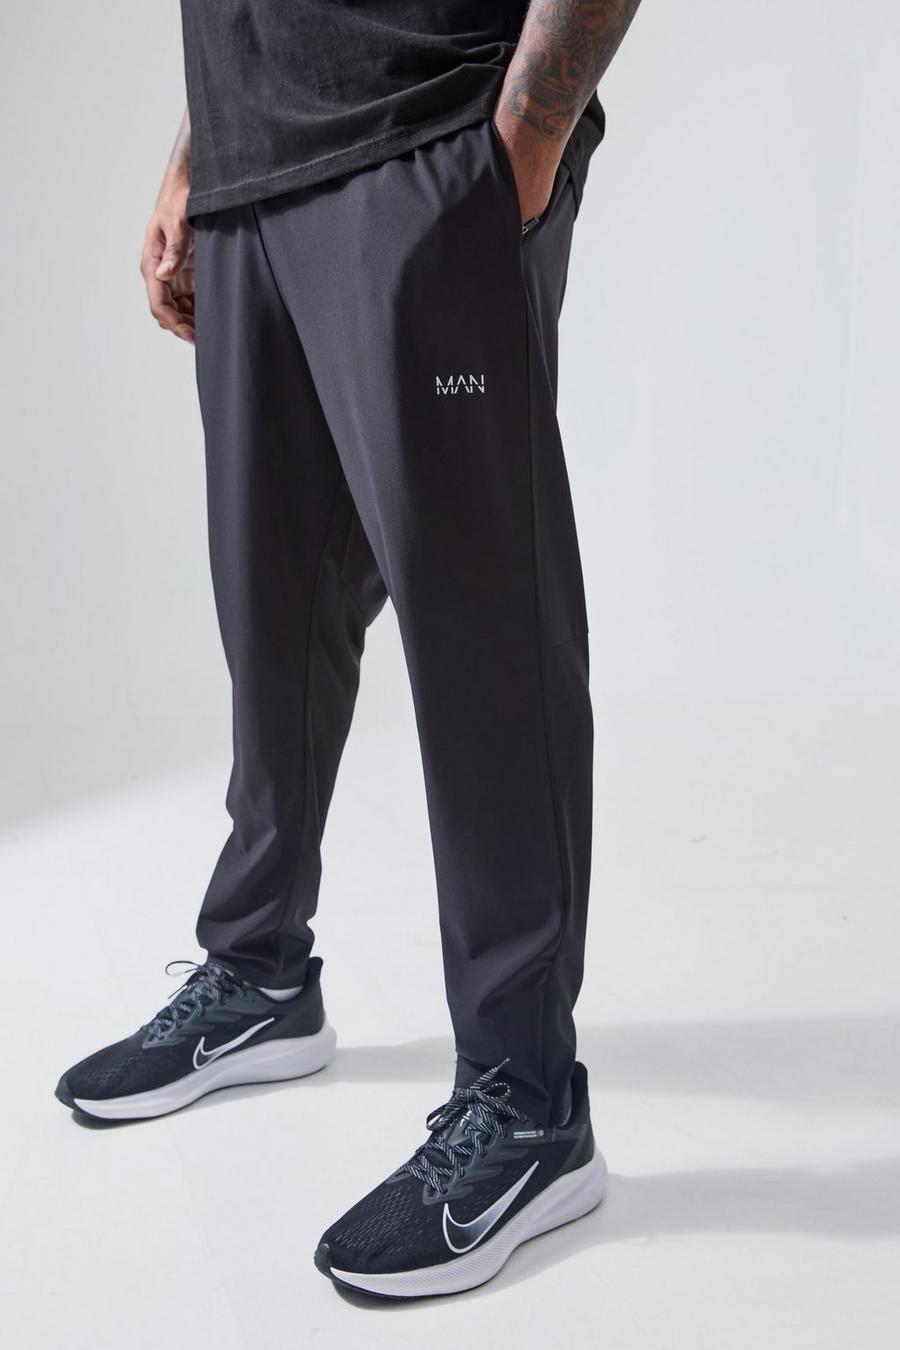 Pantaloni tuta Plus Size Man Active Gym per alta performance con tasche e zip, Black image number 1